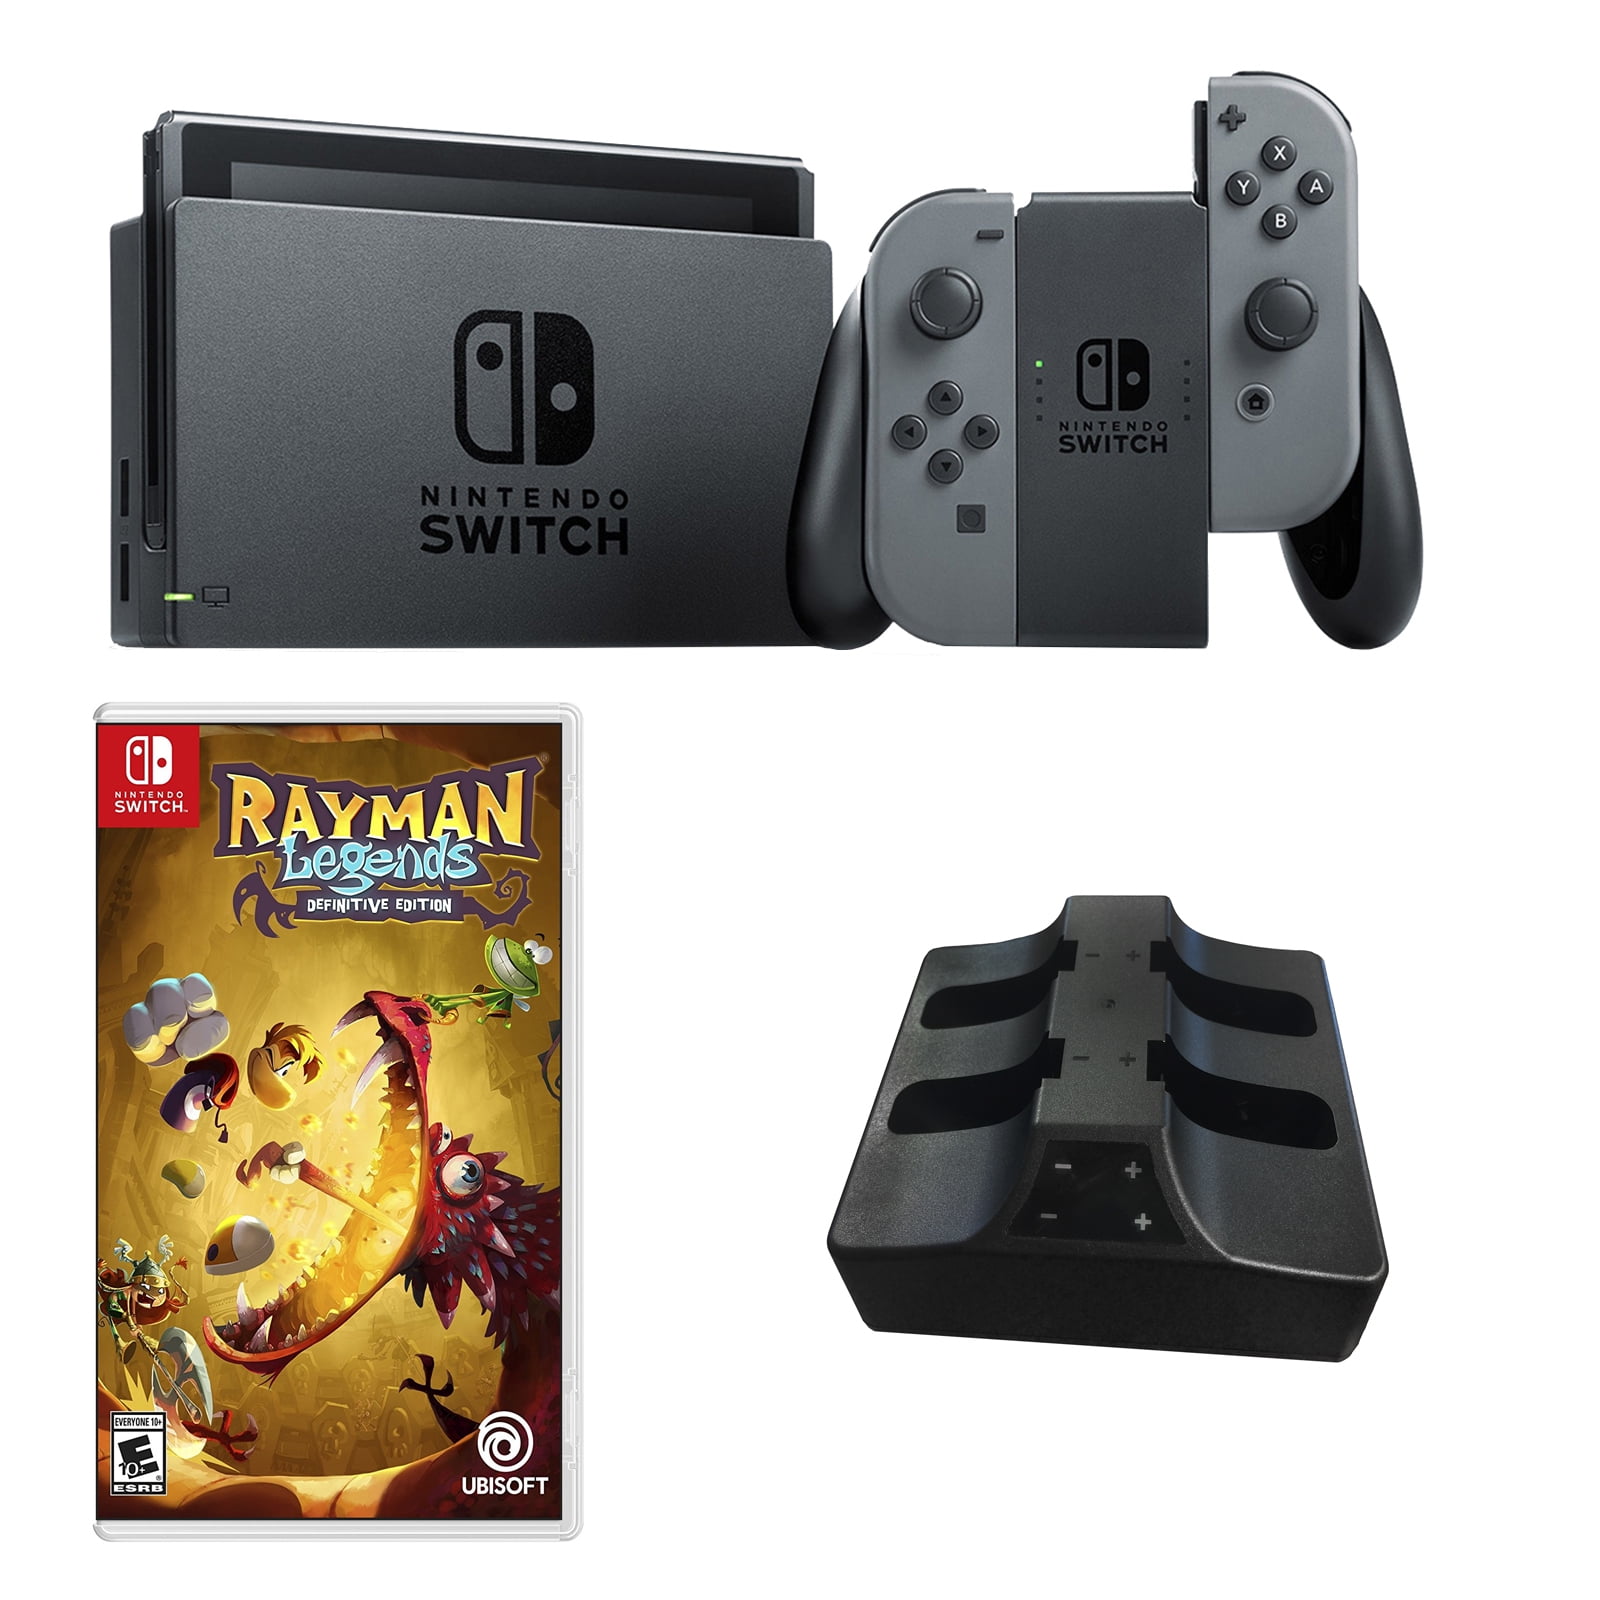 Rayman® Legends Definitive Edition for Nintendo Switch - Nintendo